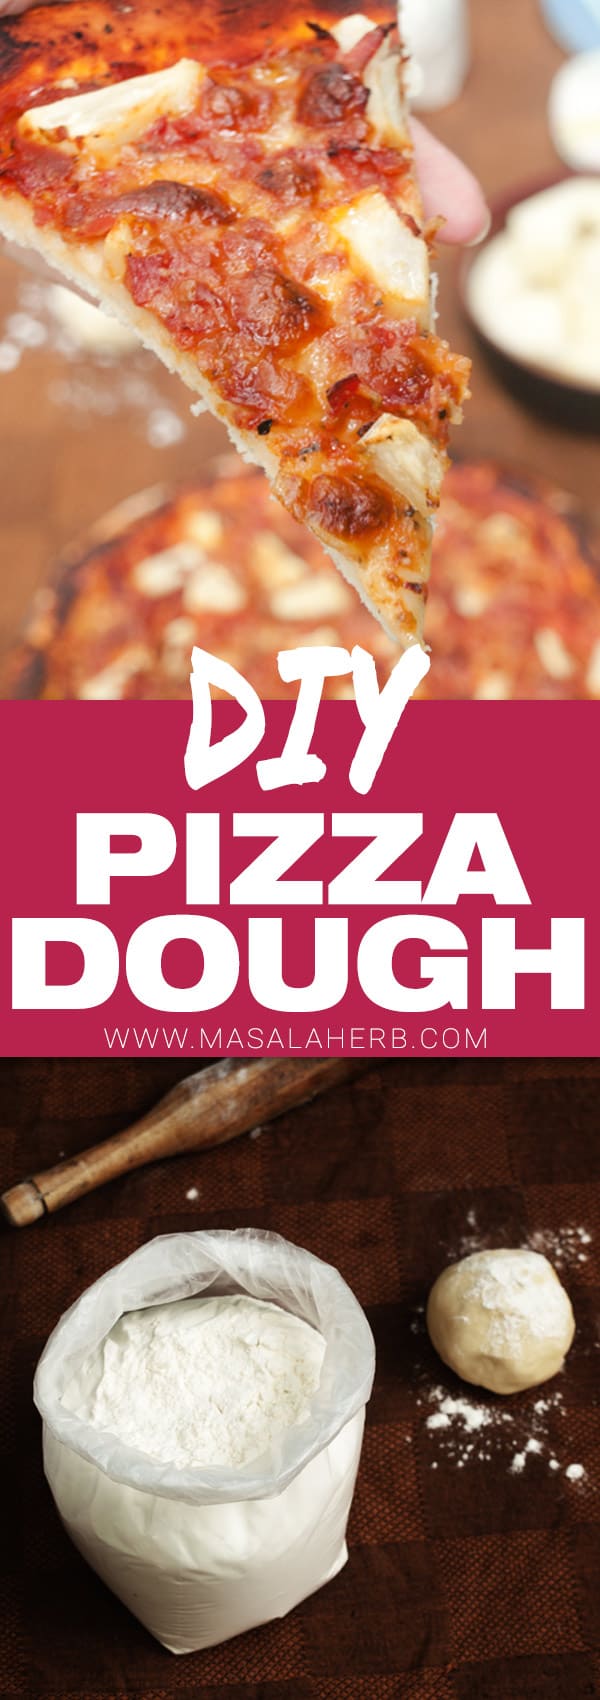 Easy Pizza Dough Recipe from scratch - How to make pizza dough - Classic soft Pizza Crust + Video www.masalaherb.com #pizza #dough #DIY #masalaherb